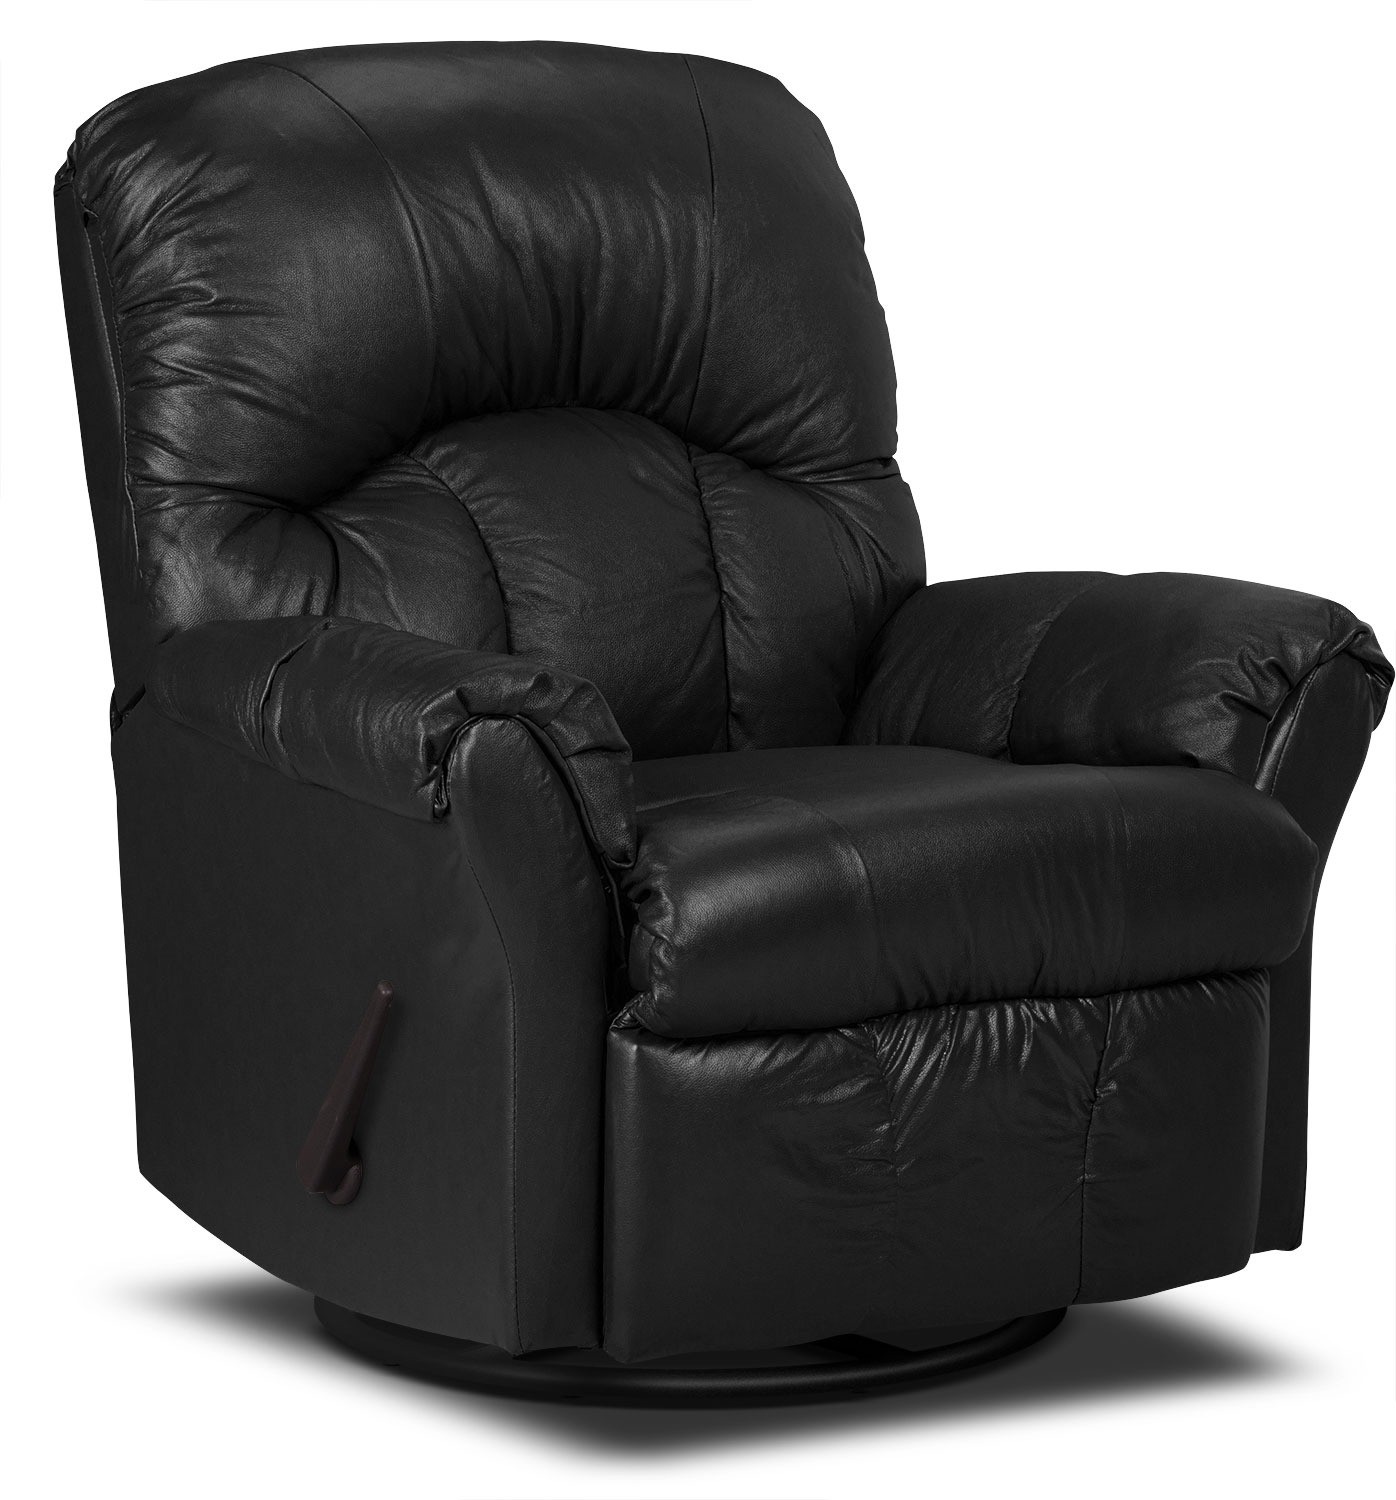 Designed2b recliner 6734 genuine leather rocker chair